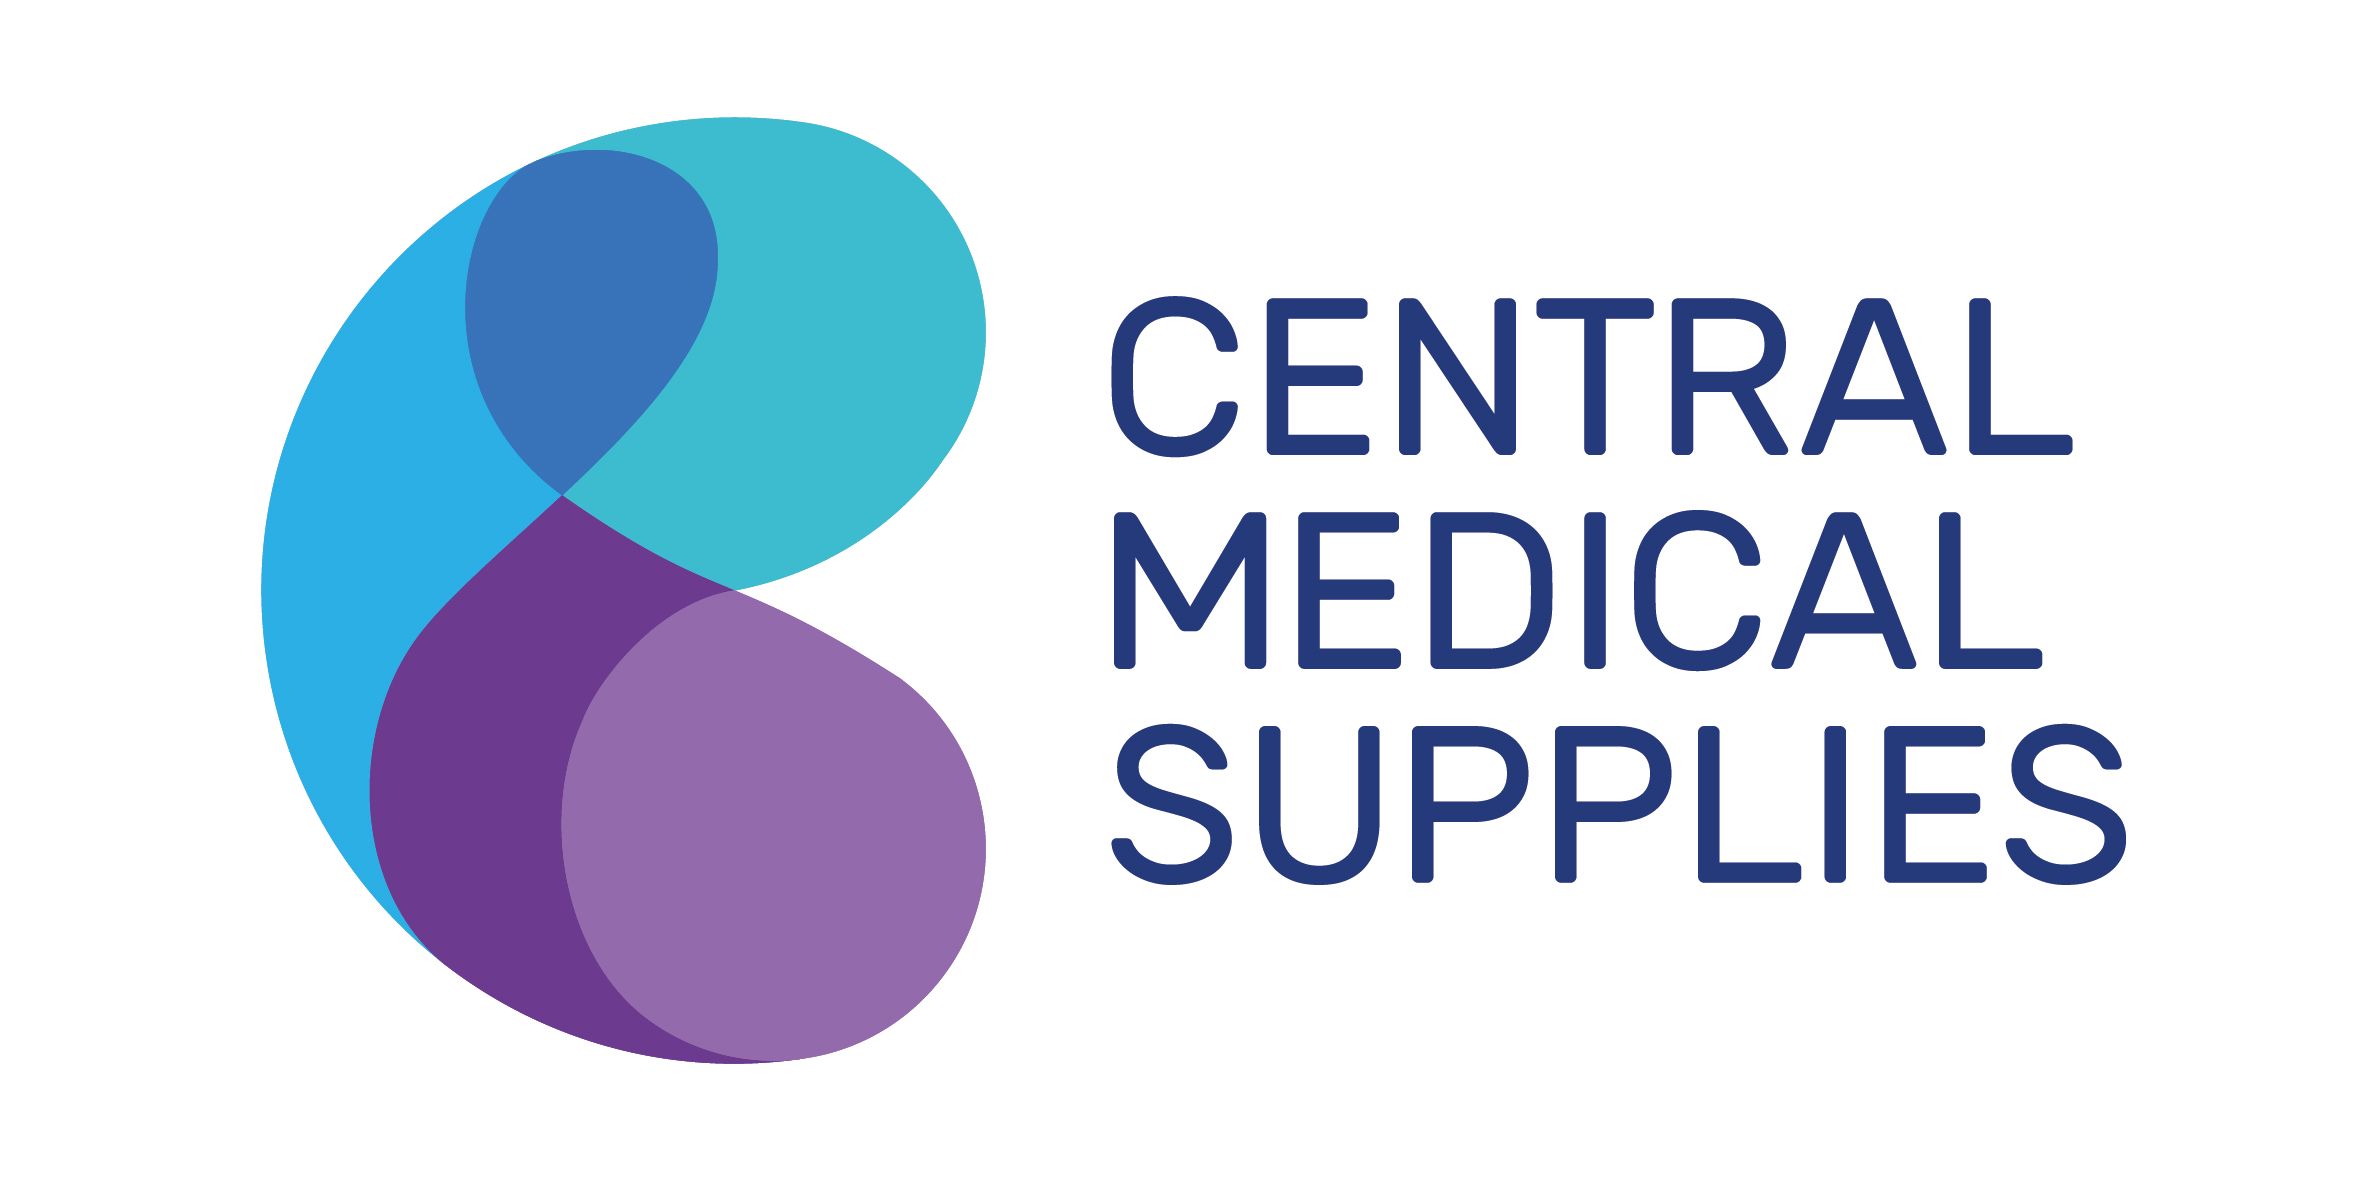 Central Medical Supplies